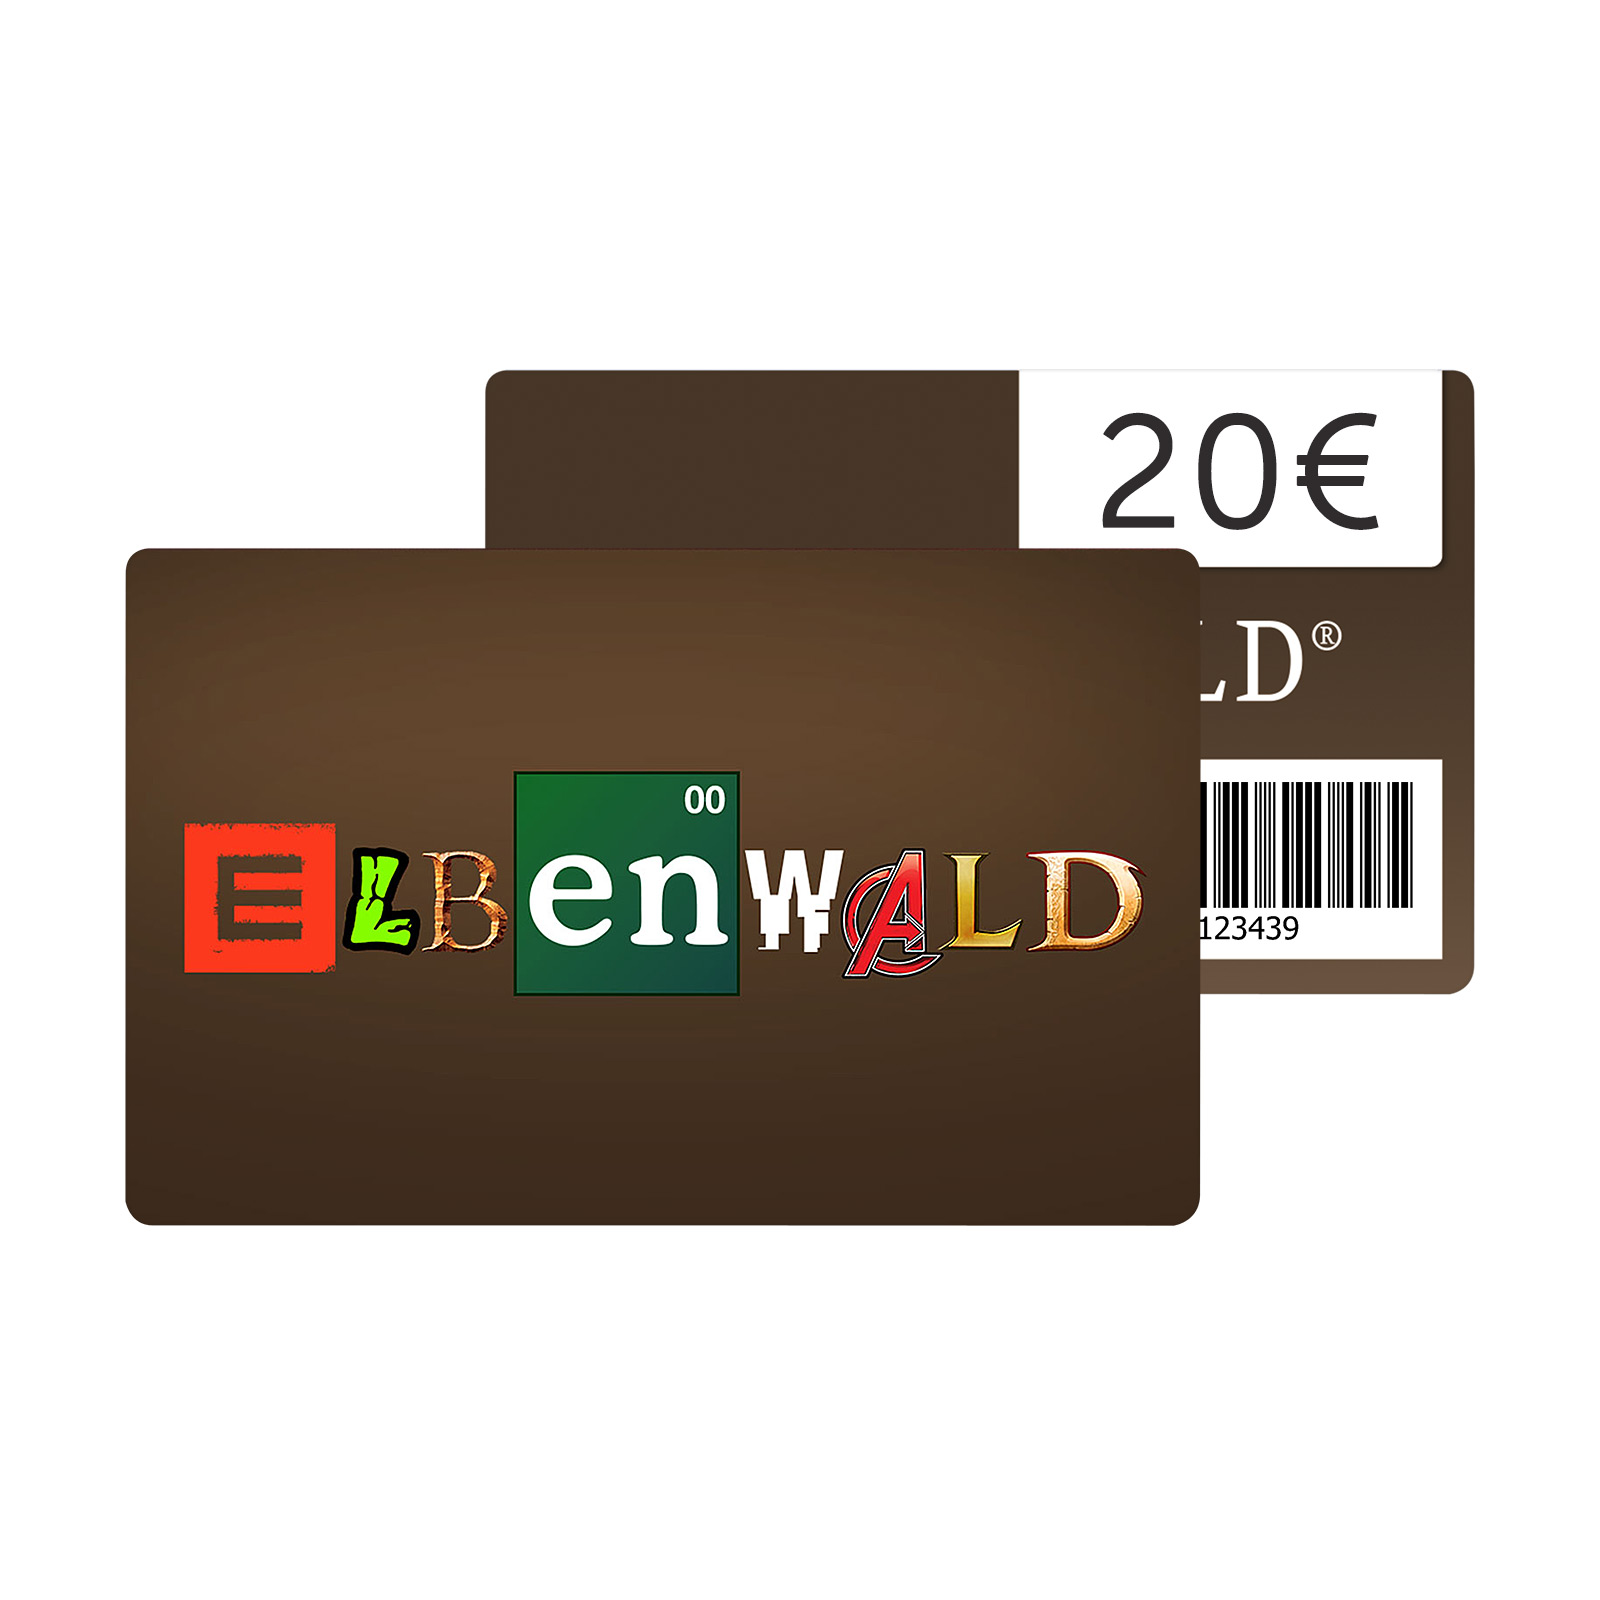 Elbenwald Gift Card - 20 Euro